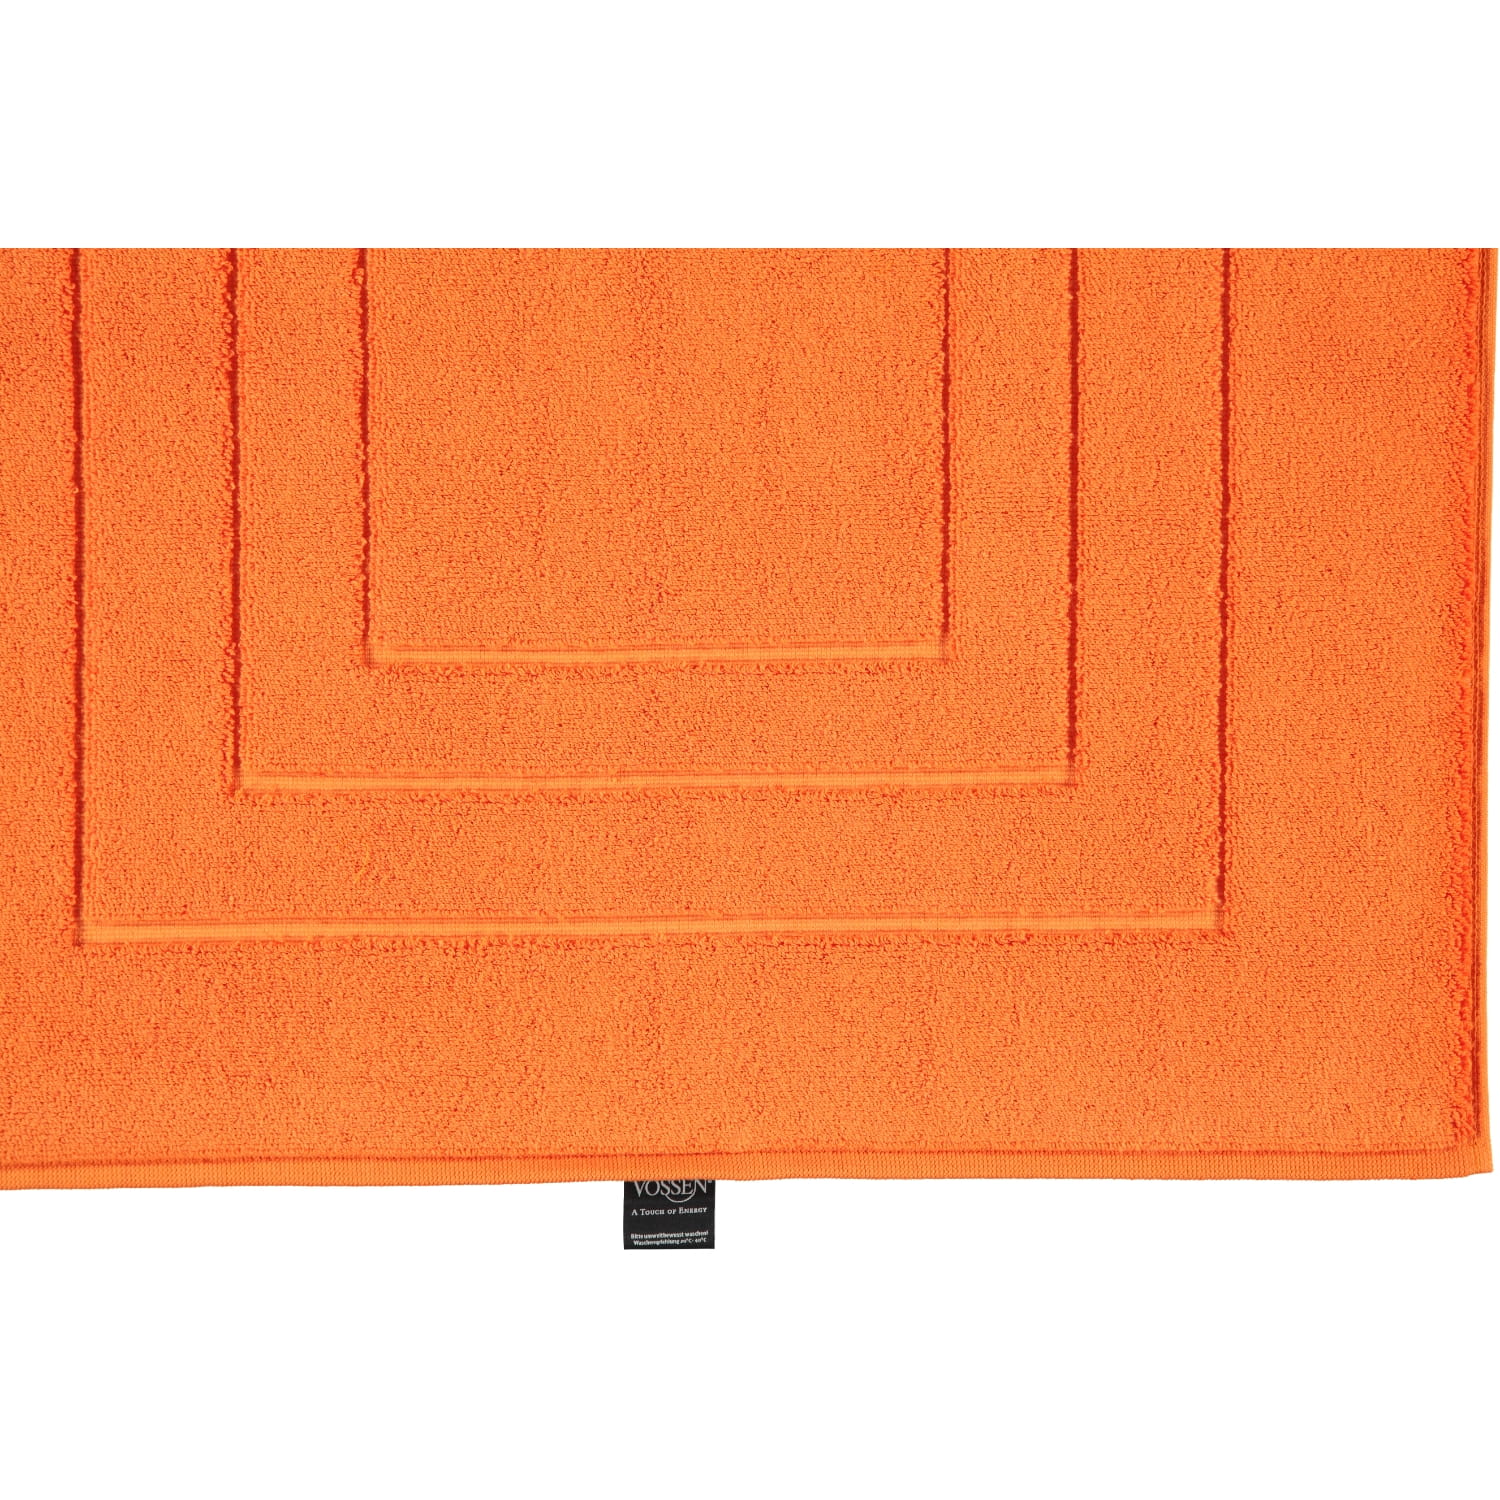 Farbe: | Marken Feeling orange 255 Vossen | - Handtücher Vossen - Calypso | Vossen